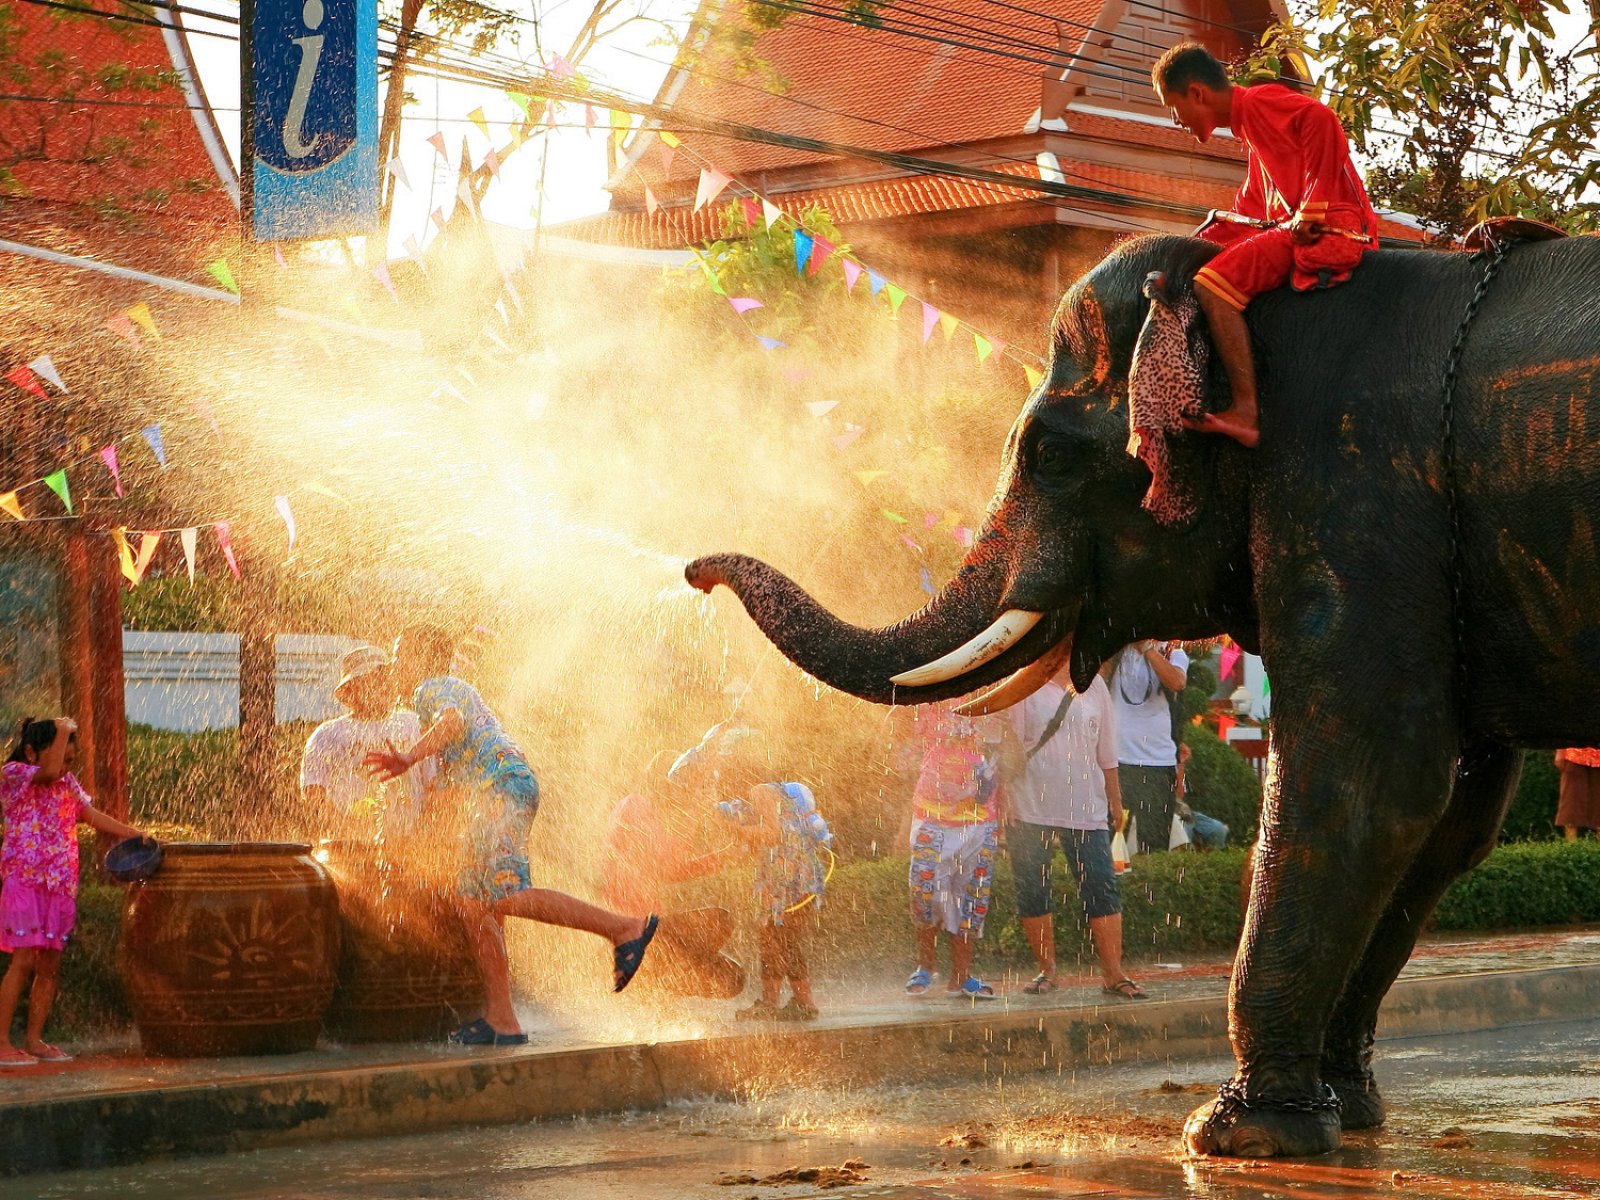 How to celebrate Songkran New Year in Phuket